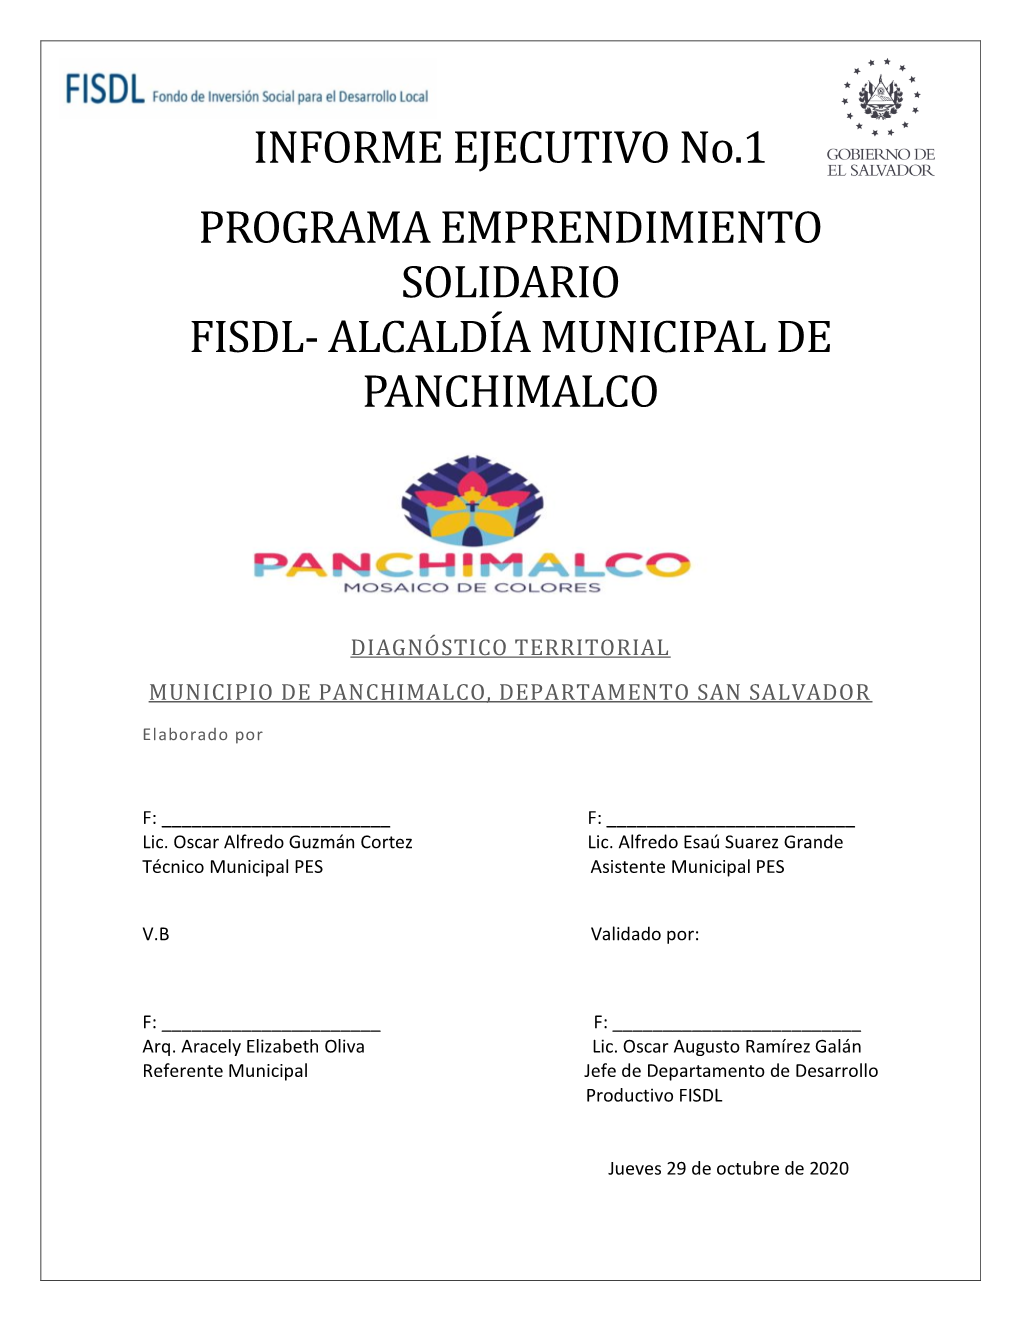 INFORME EJECUTIVO No.1 PROGRAMA EMPRENDIMIENTO SOLIDARIO FISDL- ALCALDÍA MUNICIPAL DE PANCHIMALCO